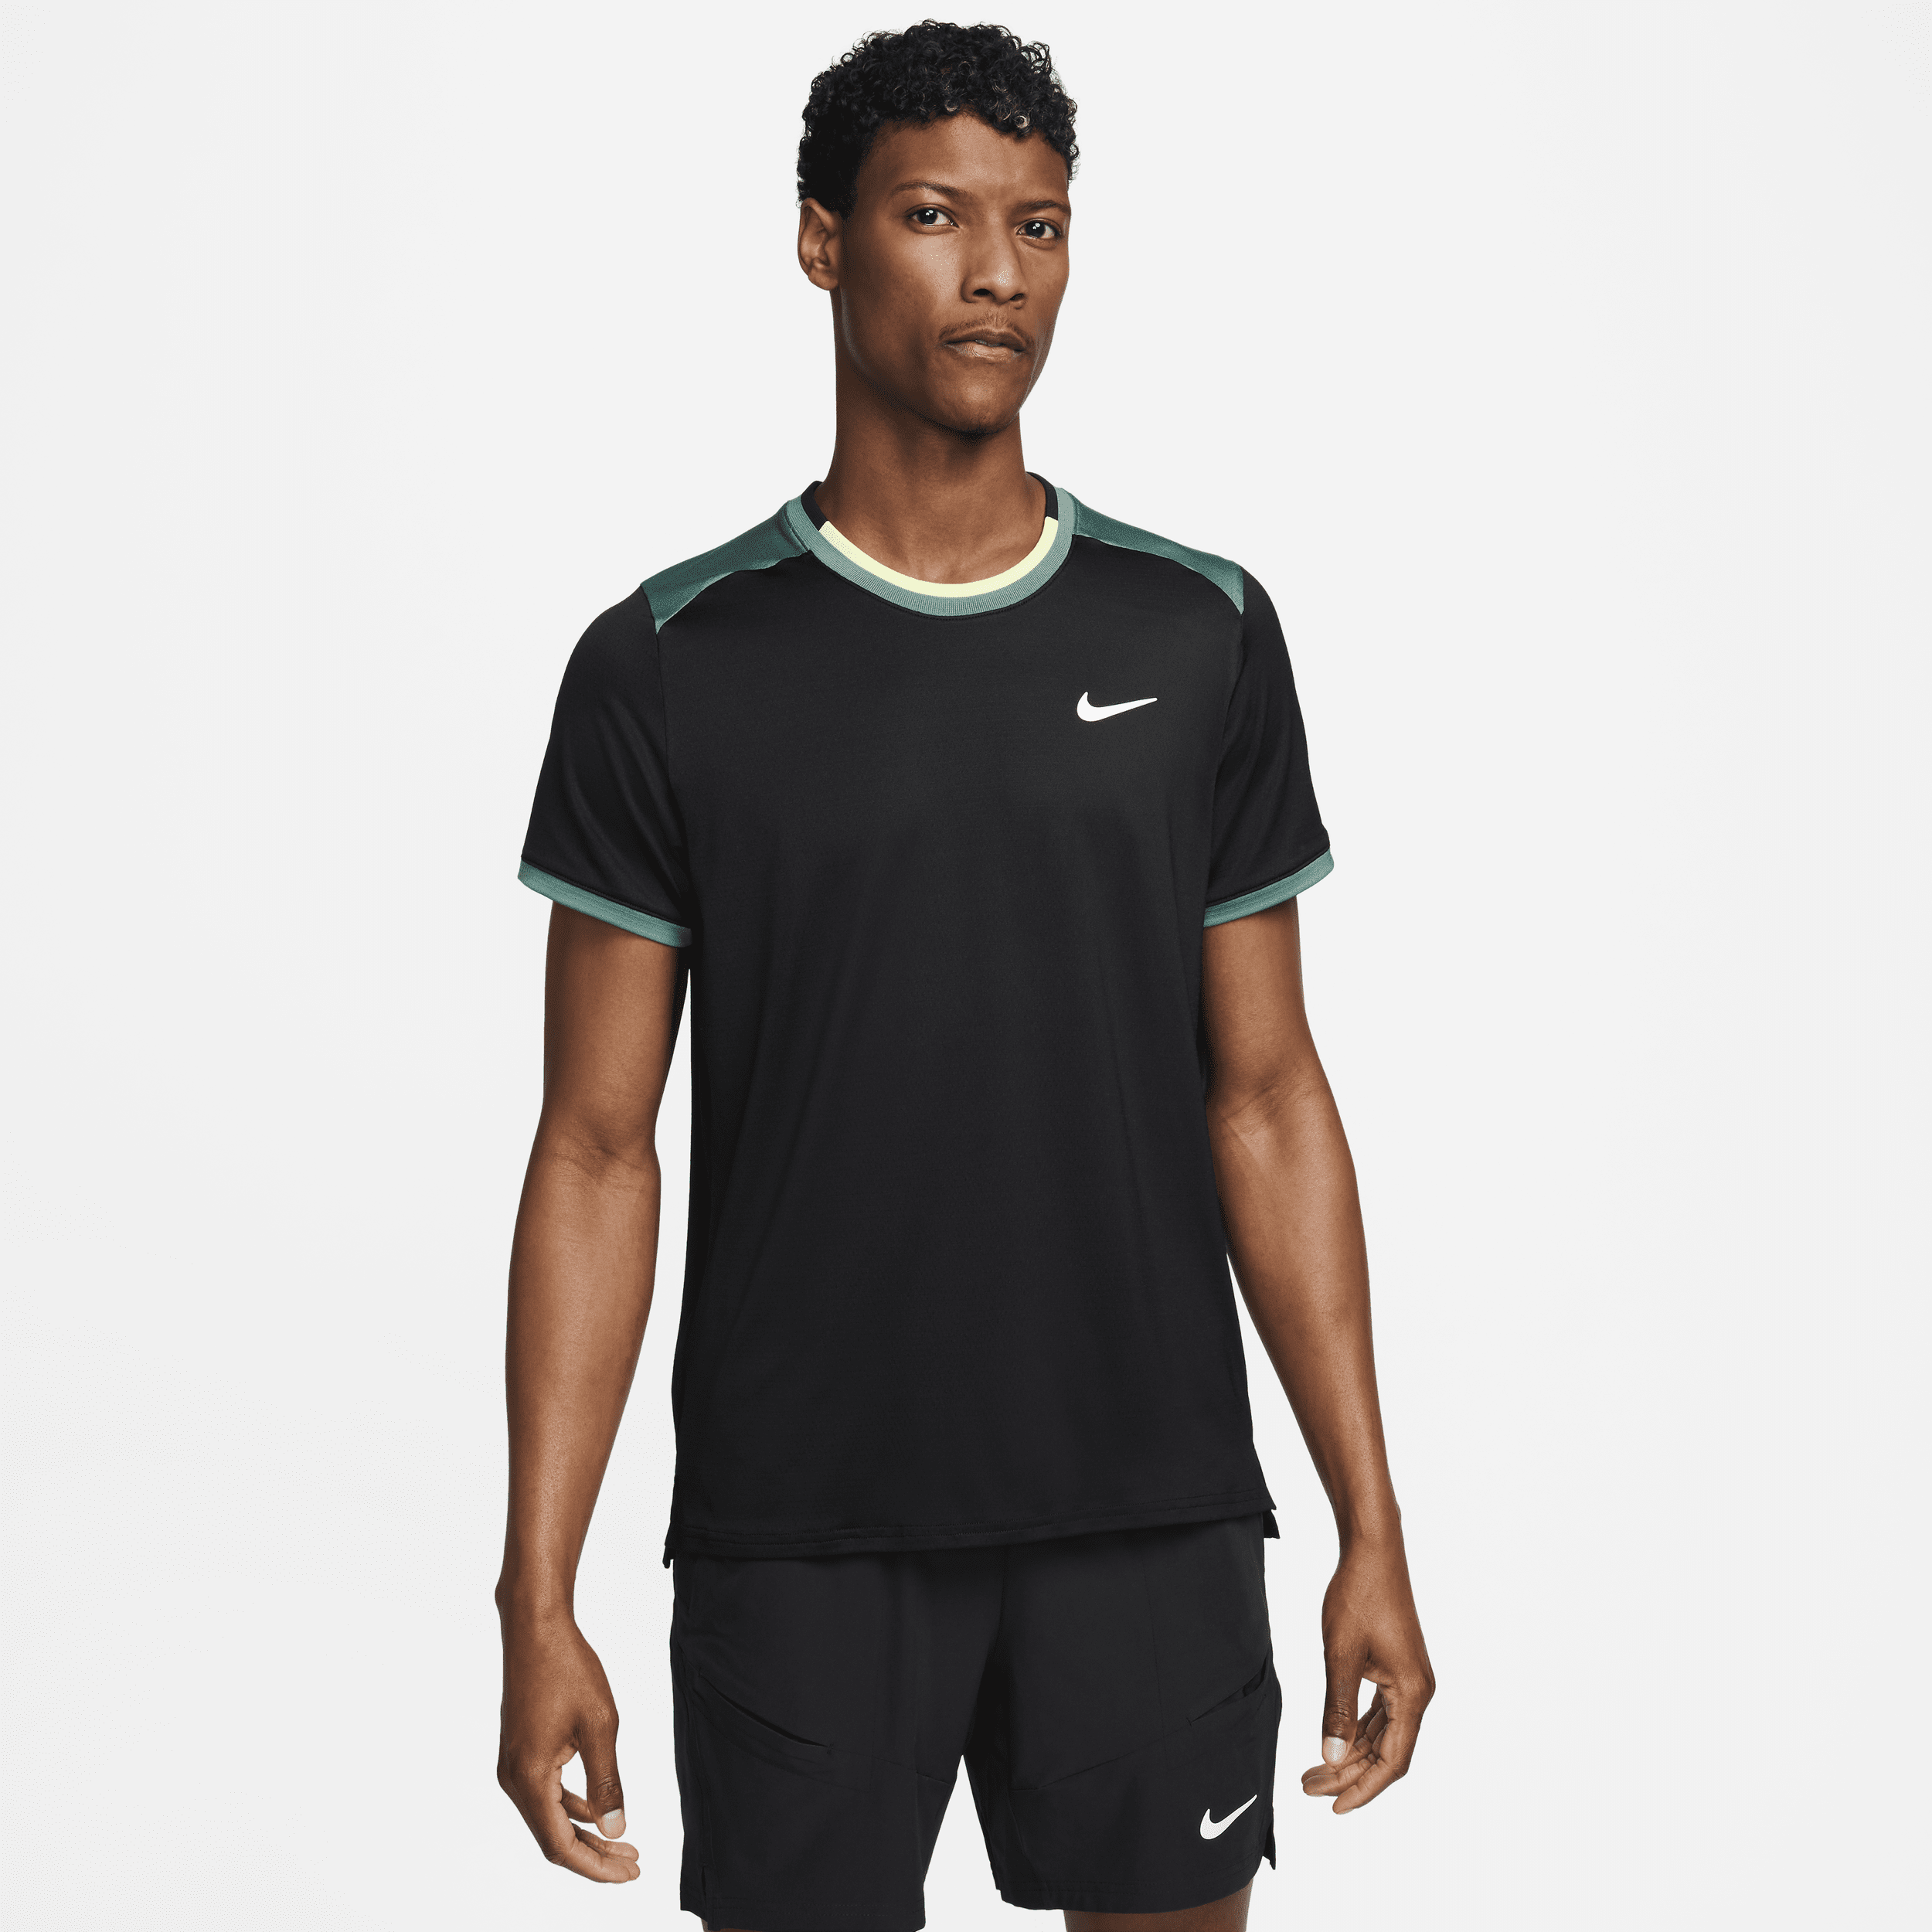 Nike Men's Court Advantage Dri-fit Tennis Top In Black